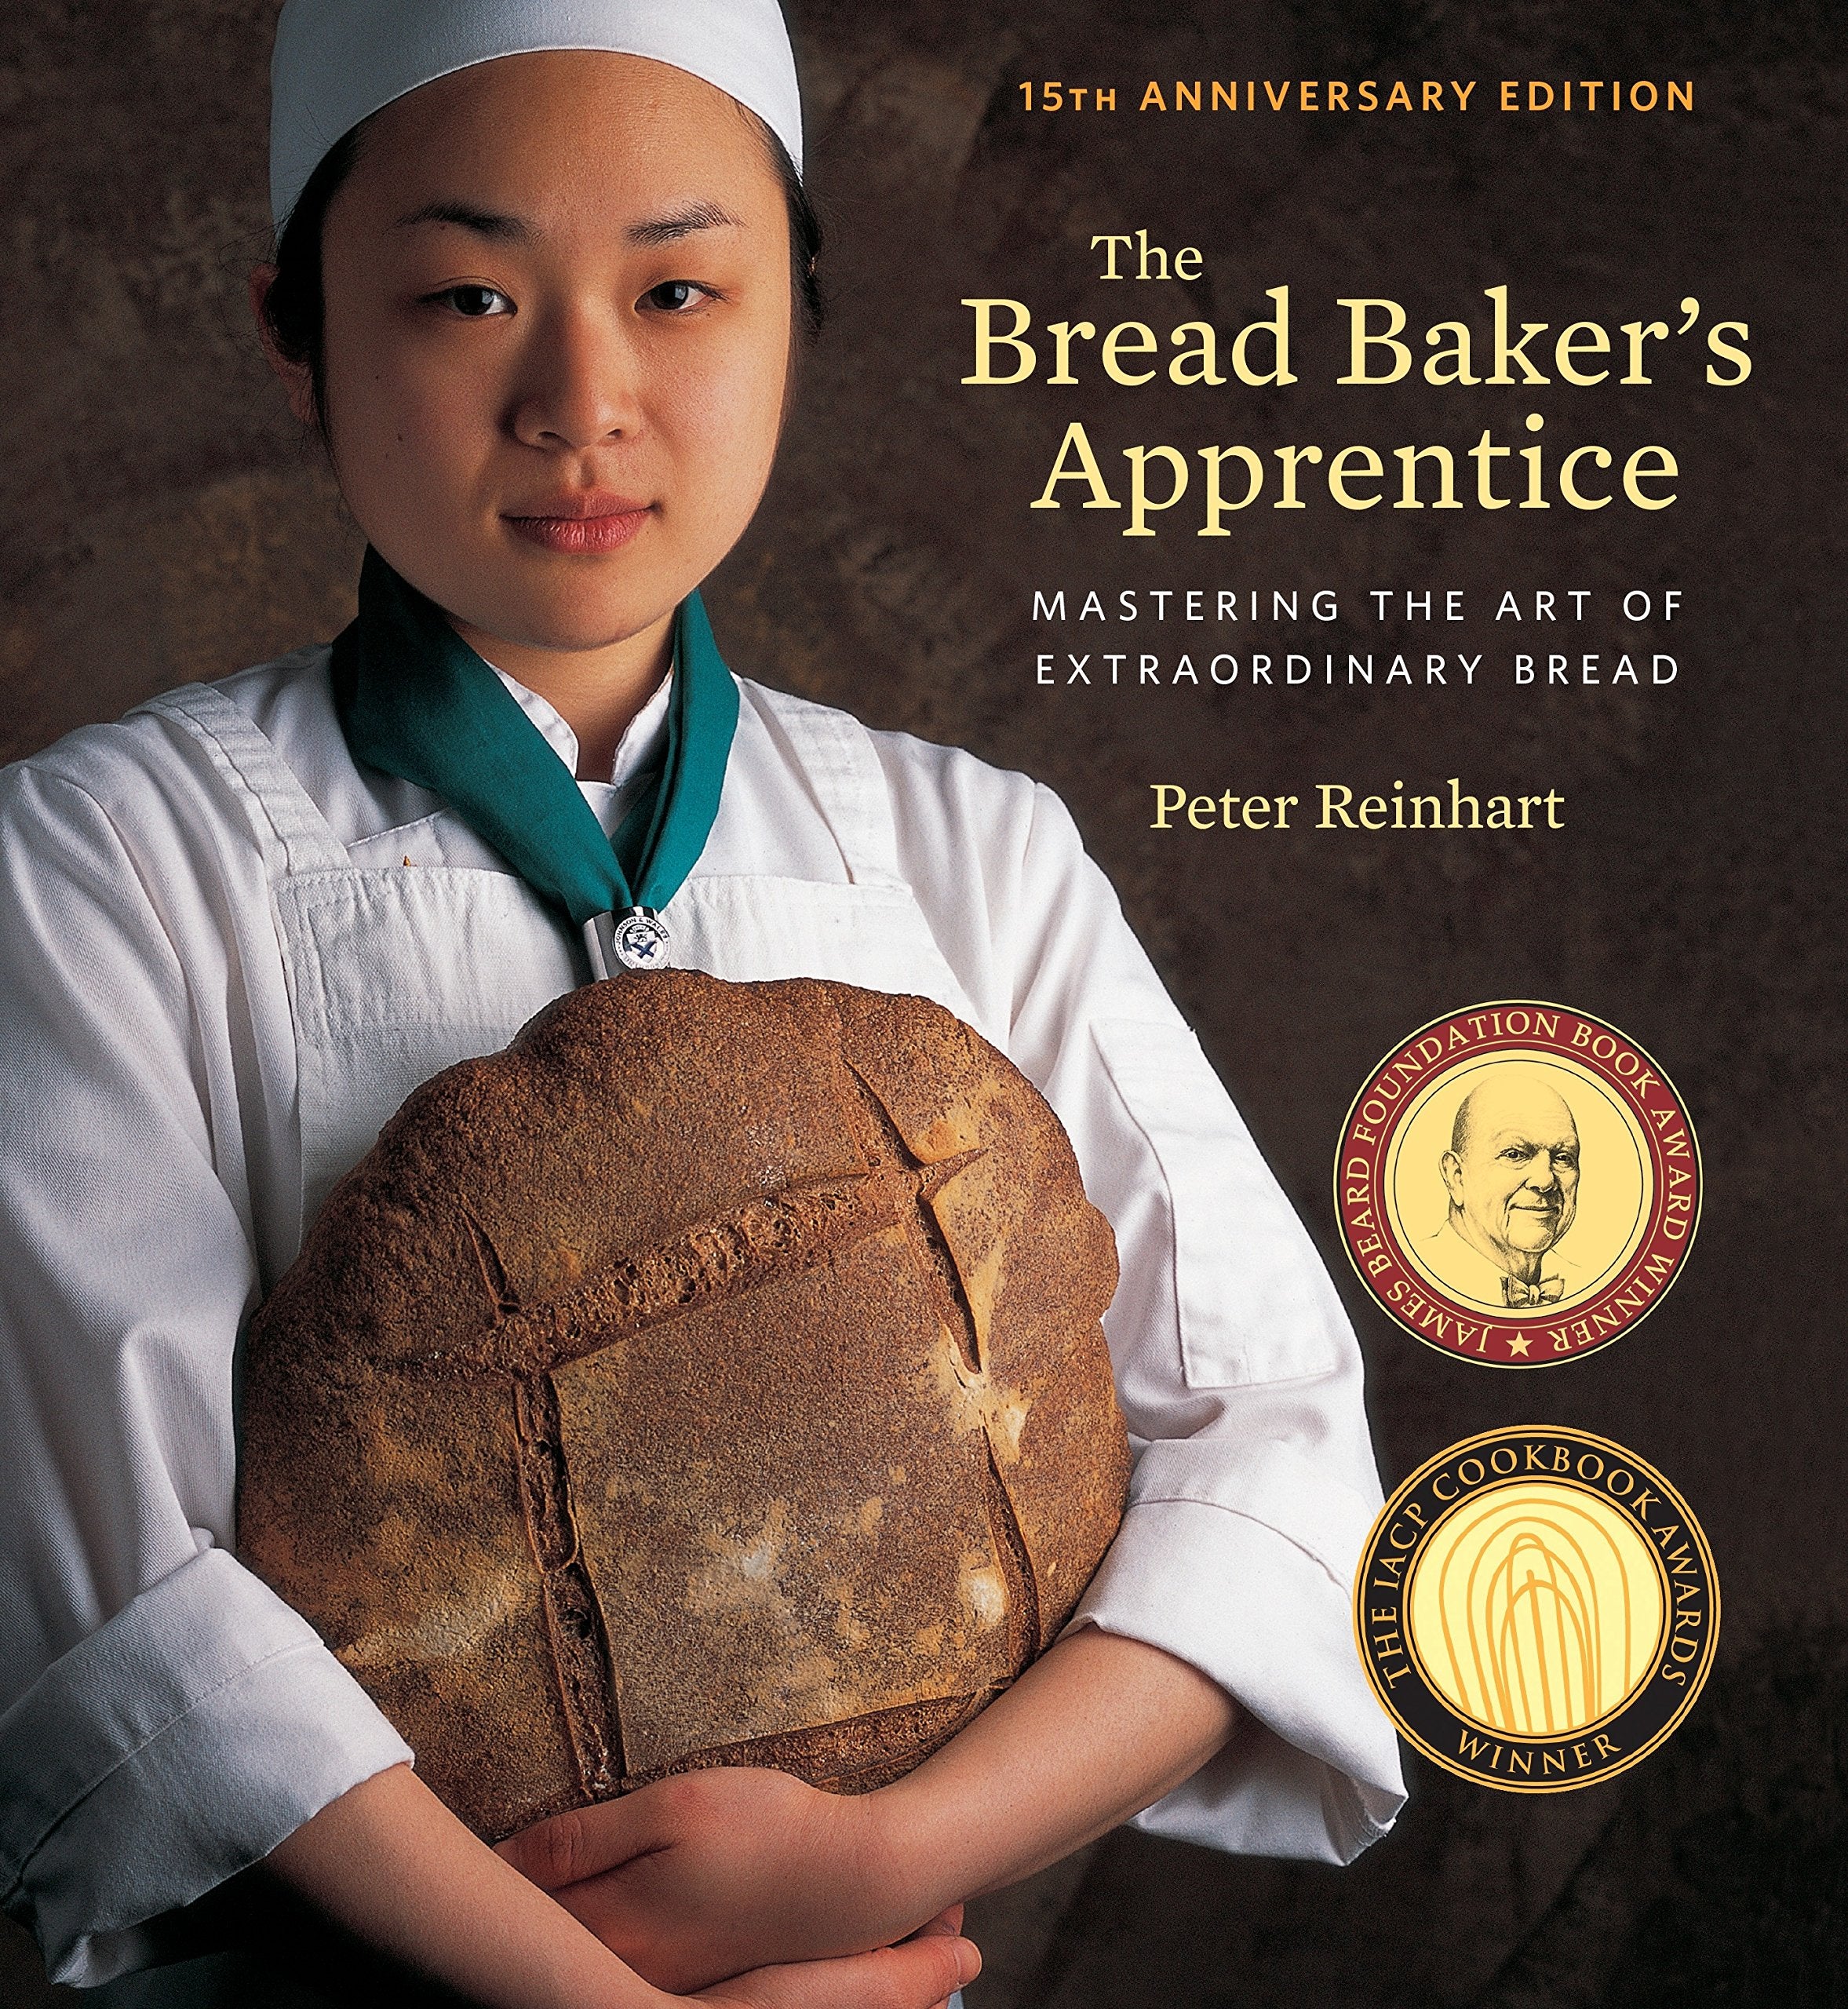 The Bread Baker's Apprentice, 15th Anniversary Edition: Mastering the Art of Extraordinary Bread (Peter Reinhart)